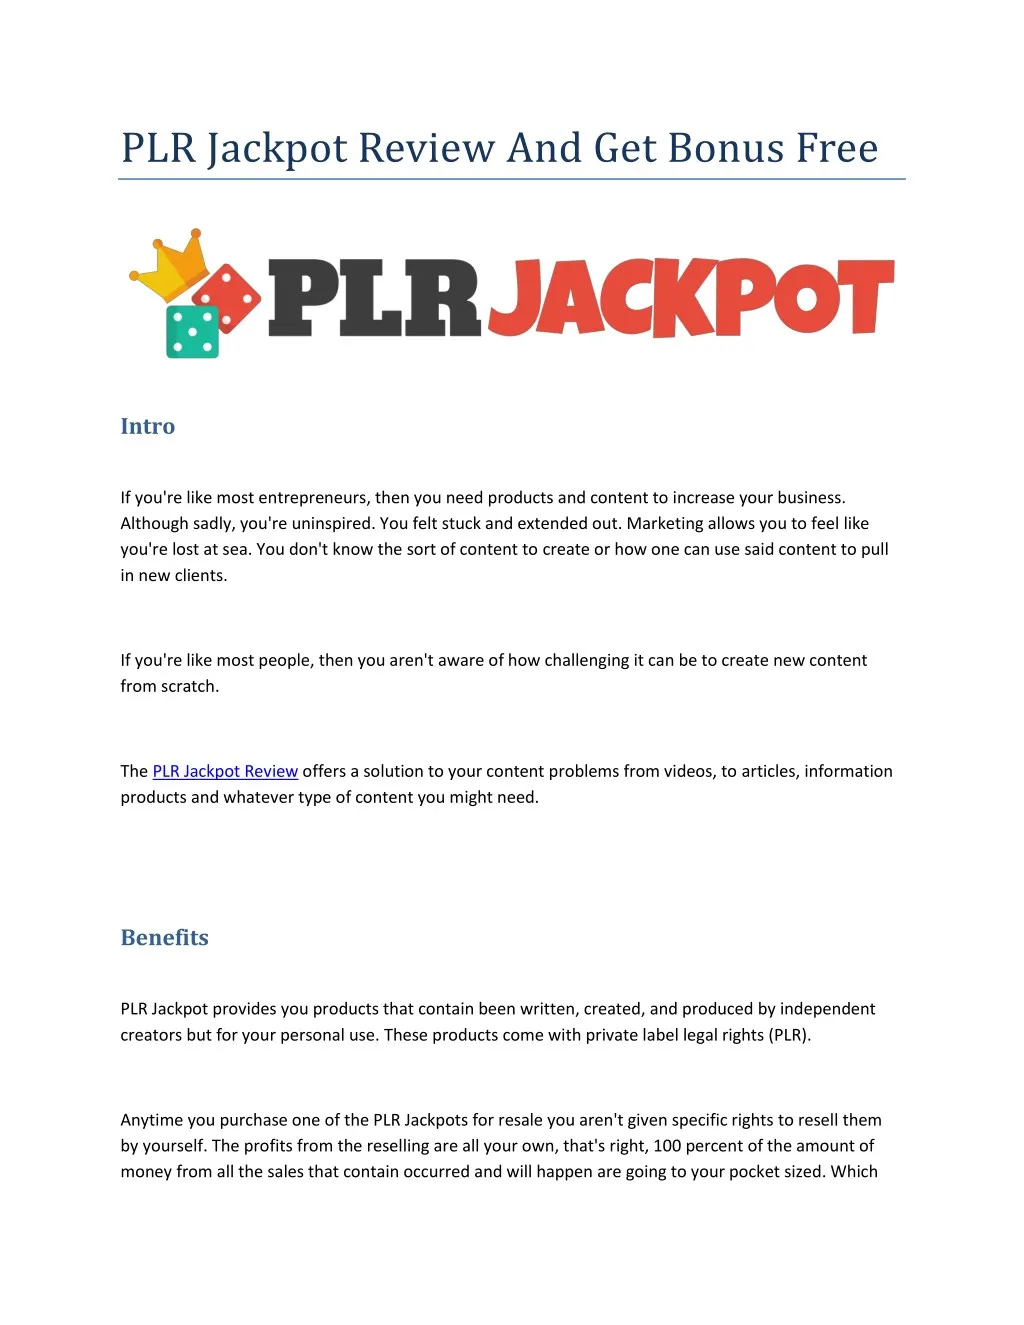 plr jackpot review and get bonus free